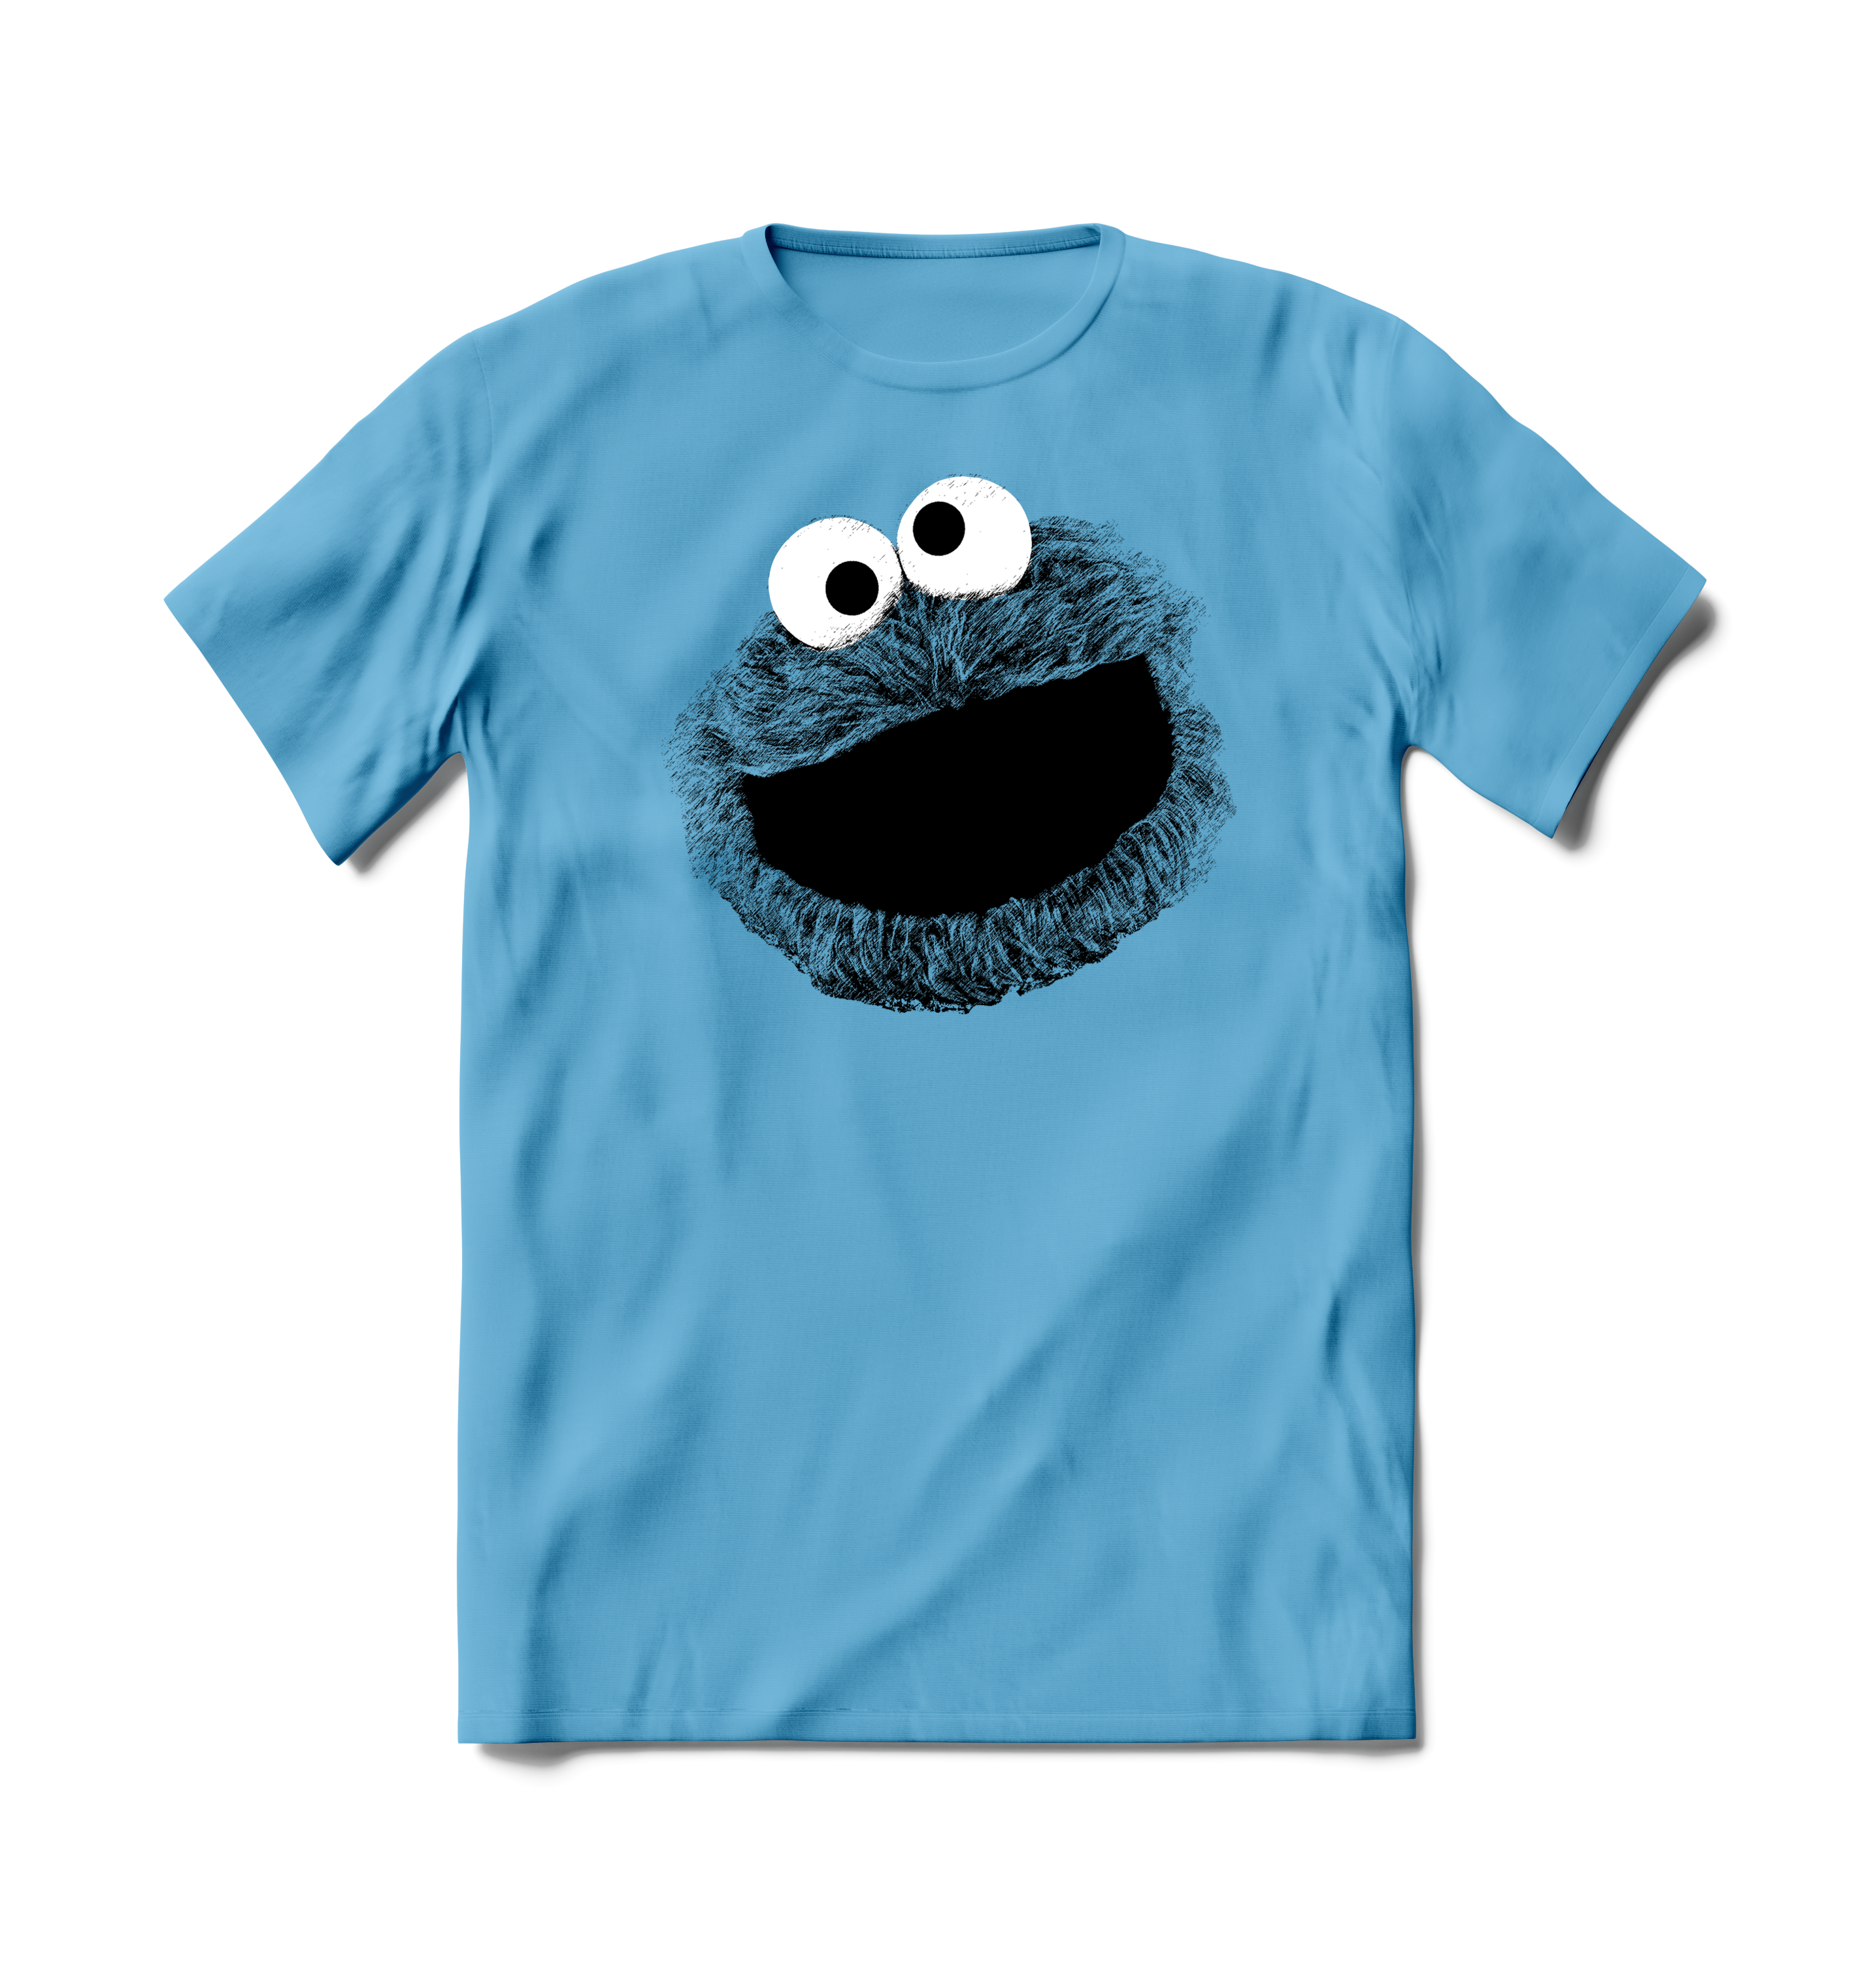 BRIEF INSANITY Sesame Street Cookie Monster Short Sleeve Shirt